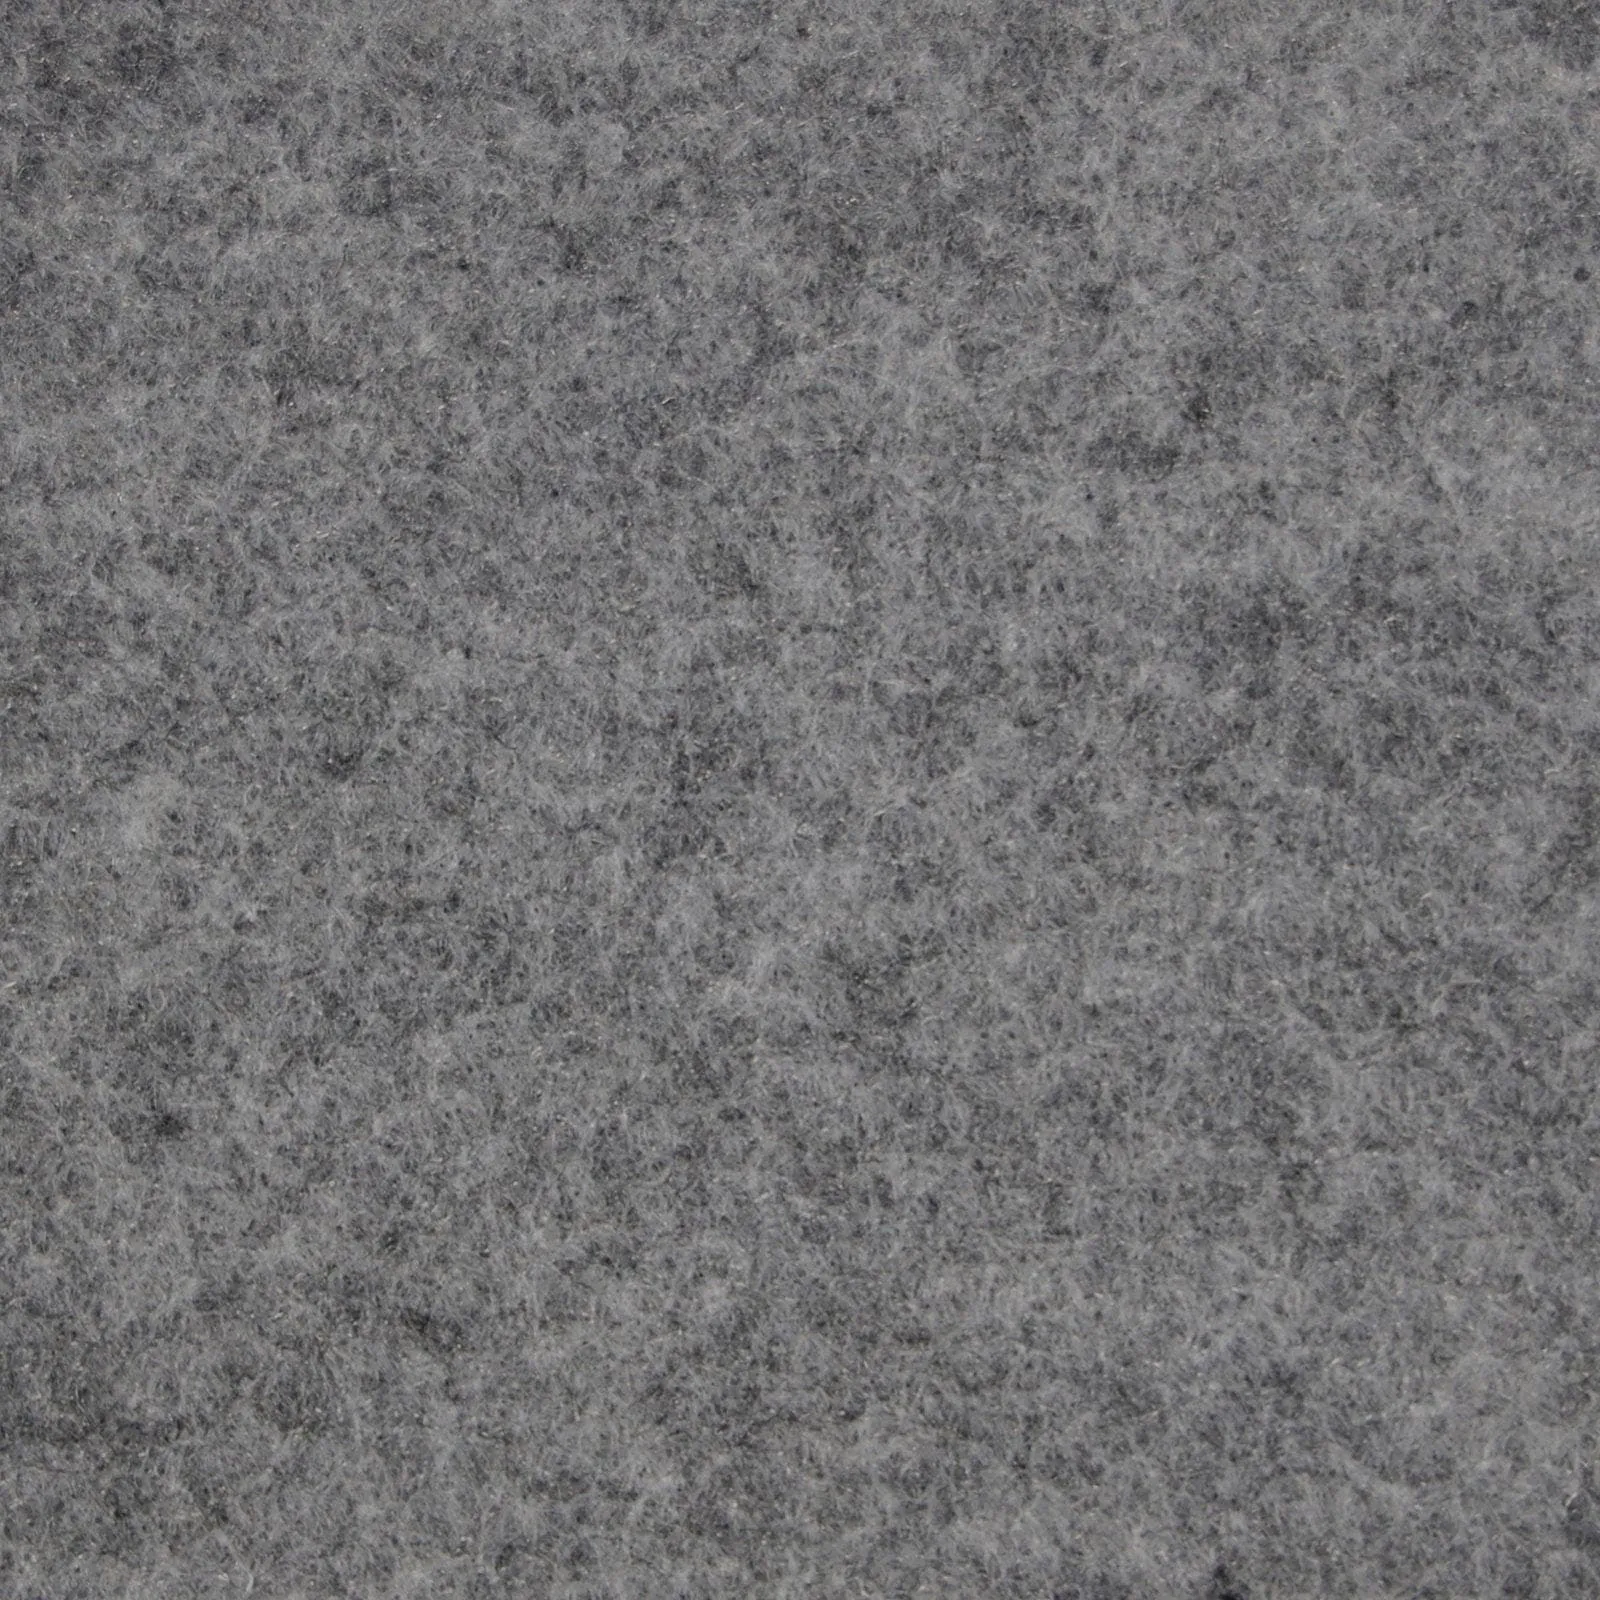 MY HOME Teppichboden "Superflex" Teppiche Nadelfilz, verschiedene Farben & Größen Gr. B/L: 200 cm x 800 cm, 4 mm, 1 St., grau Teppichboden